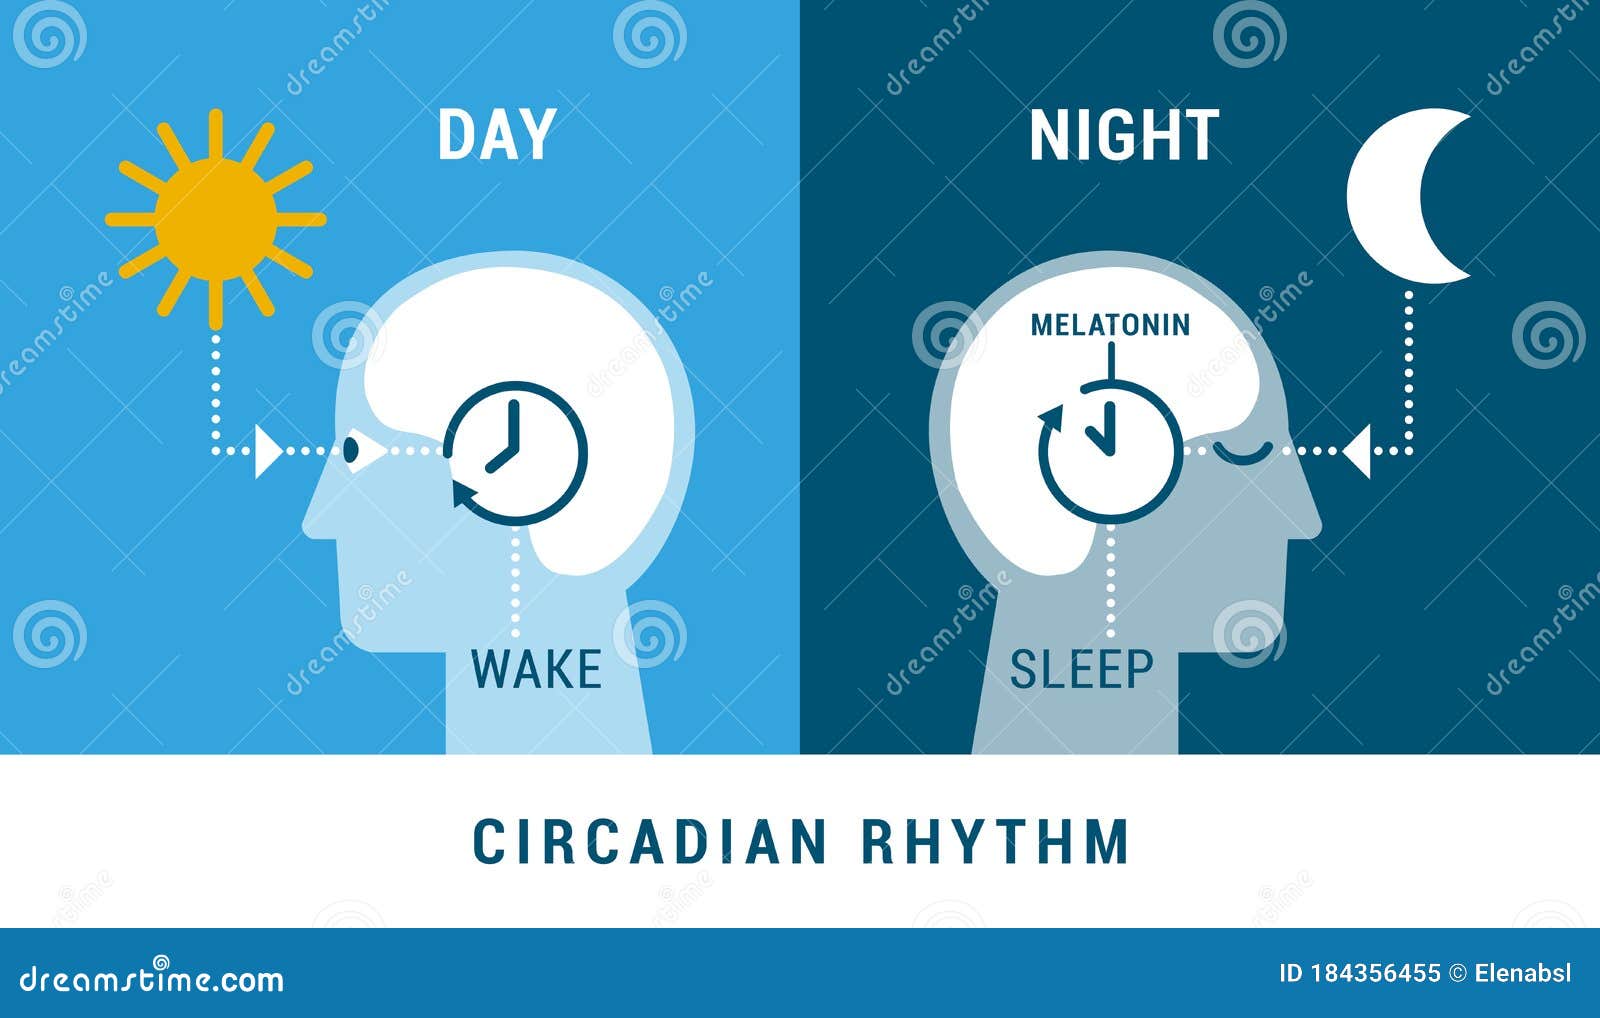 the circadian rhythm and sleep-wake cycle